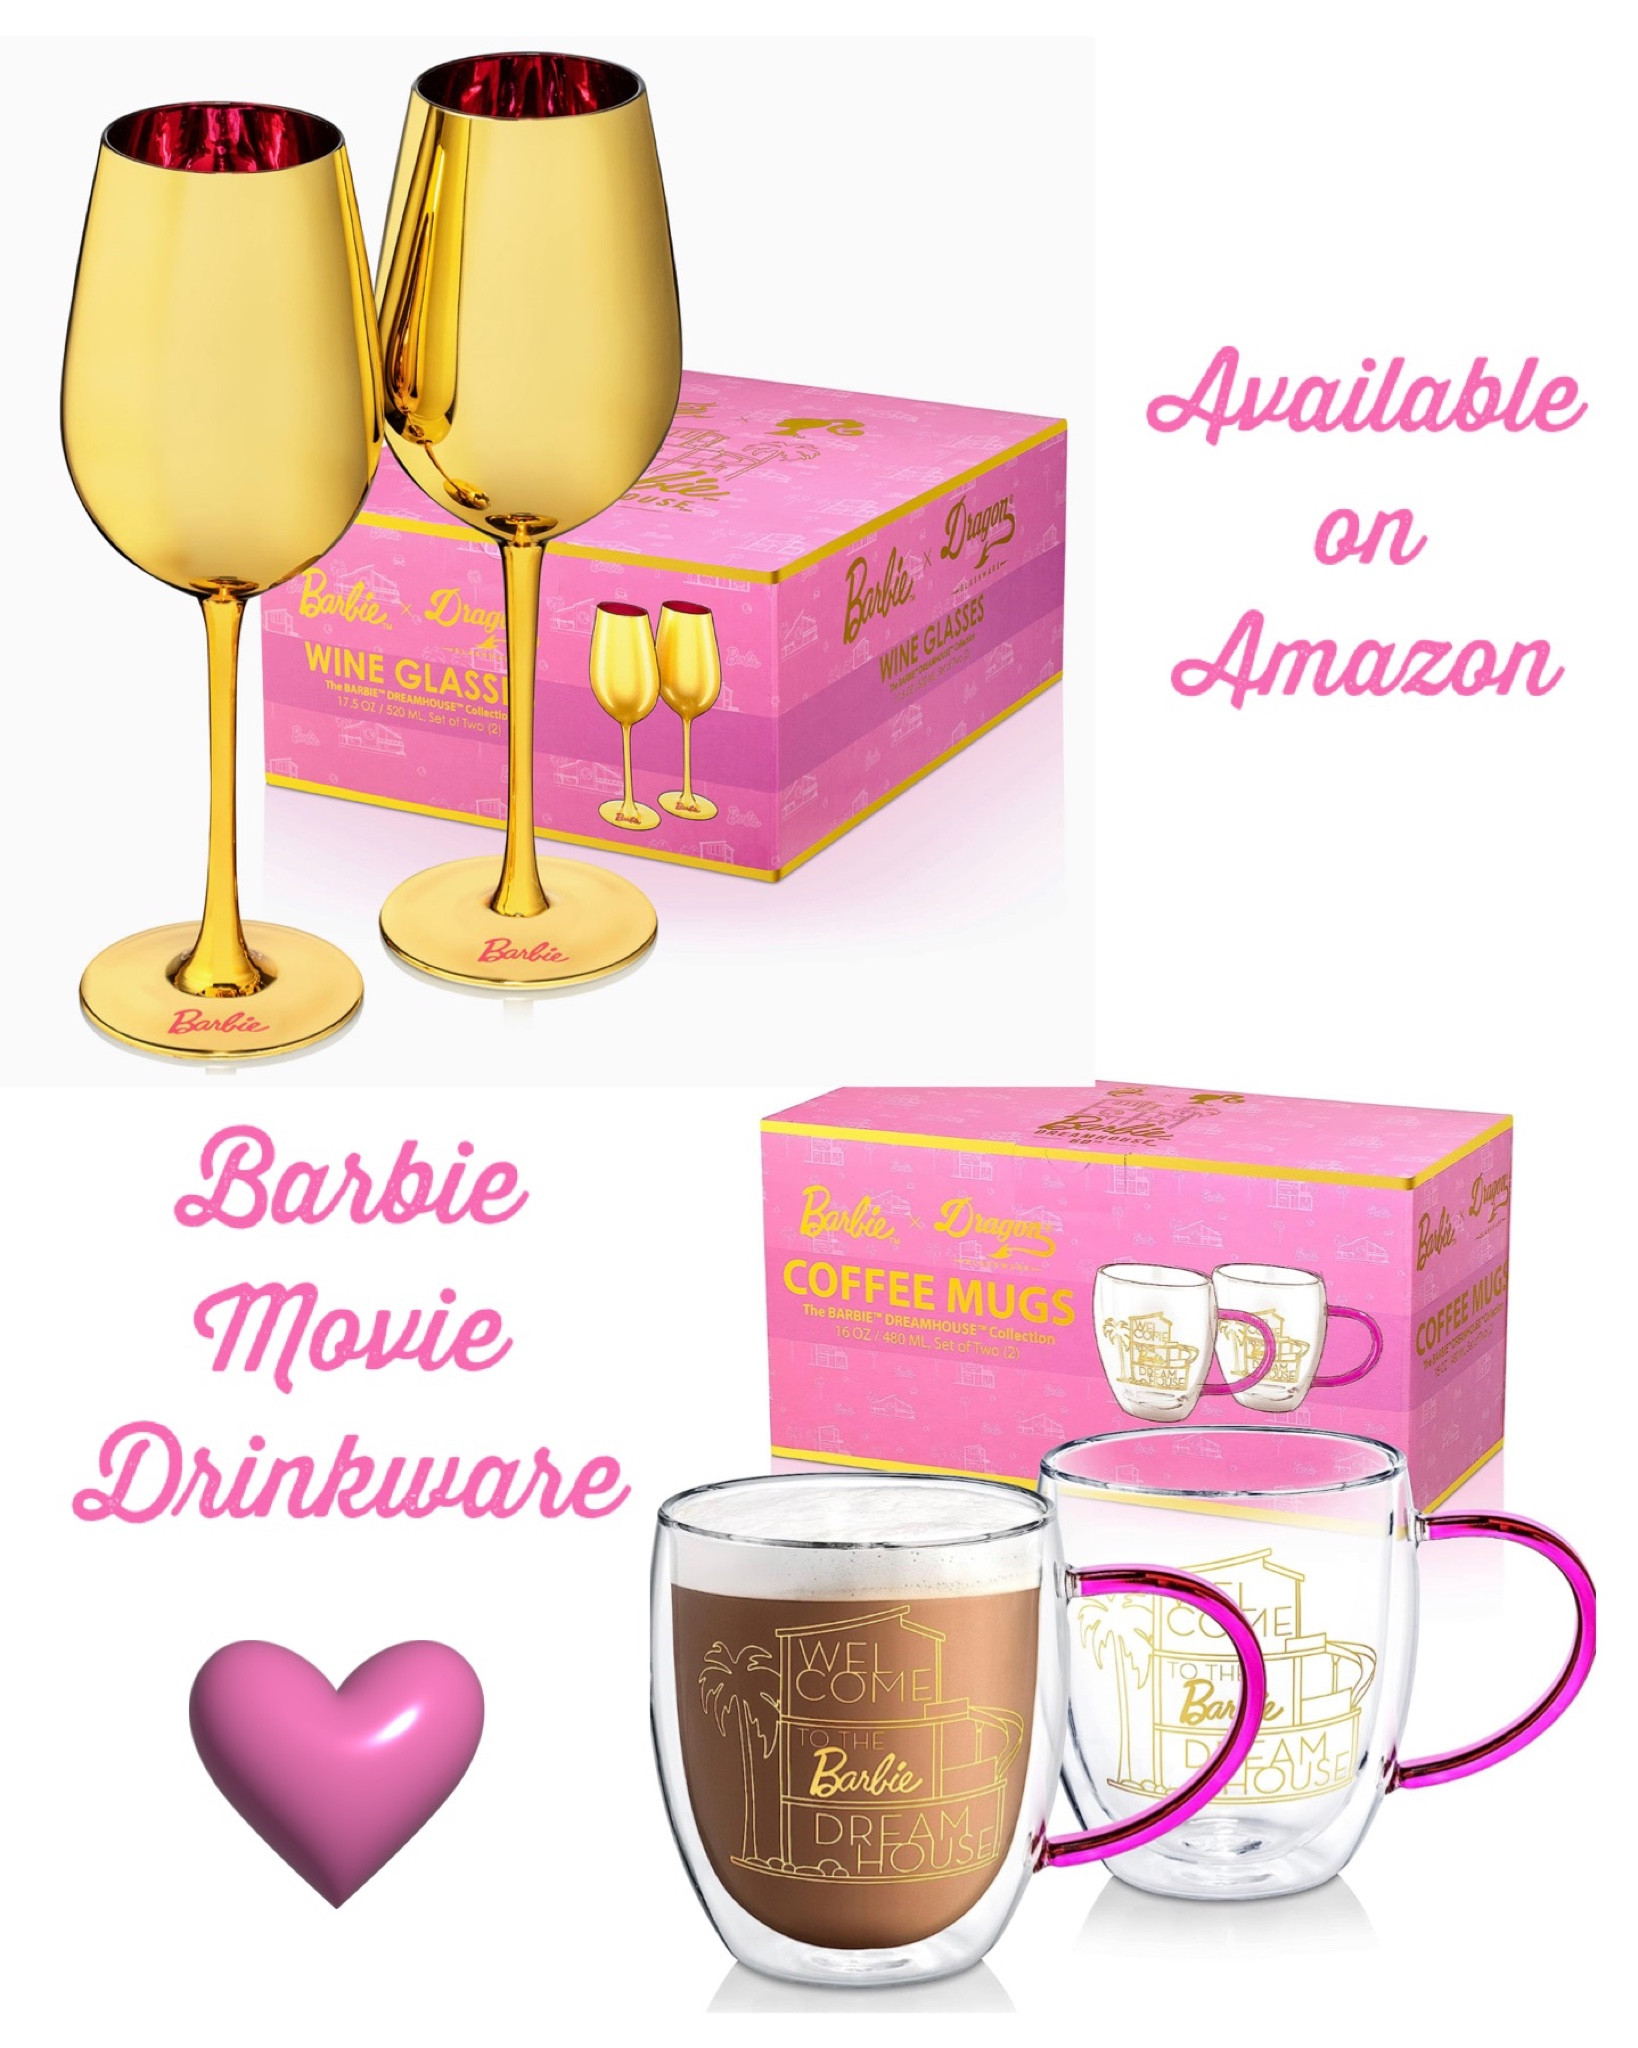 Dragon Glassware x Barbie Wine Glasses, Dreamhouse